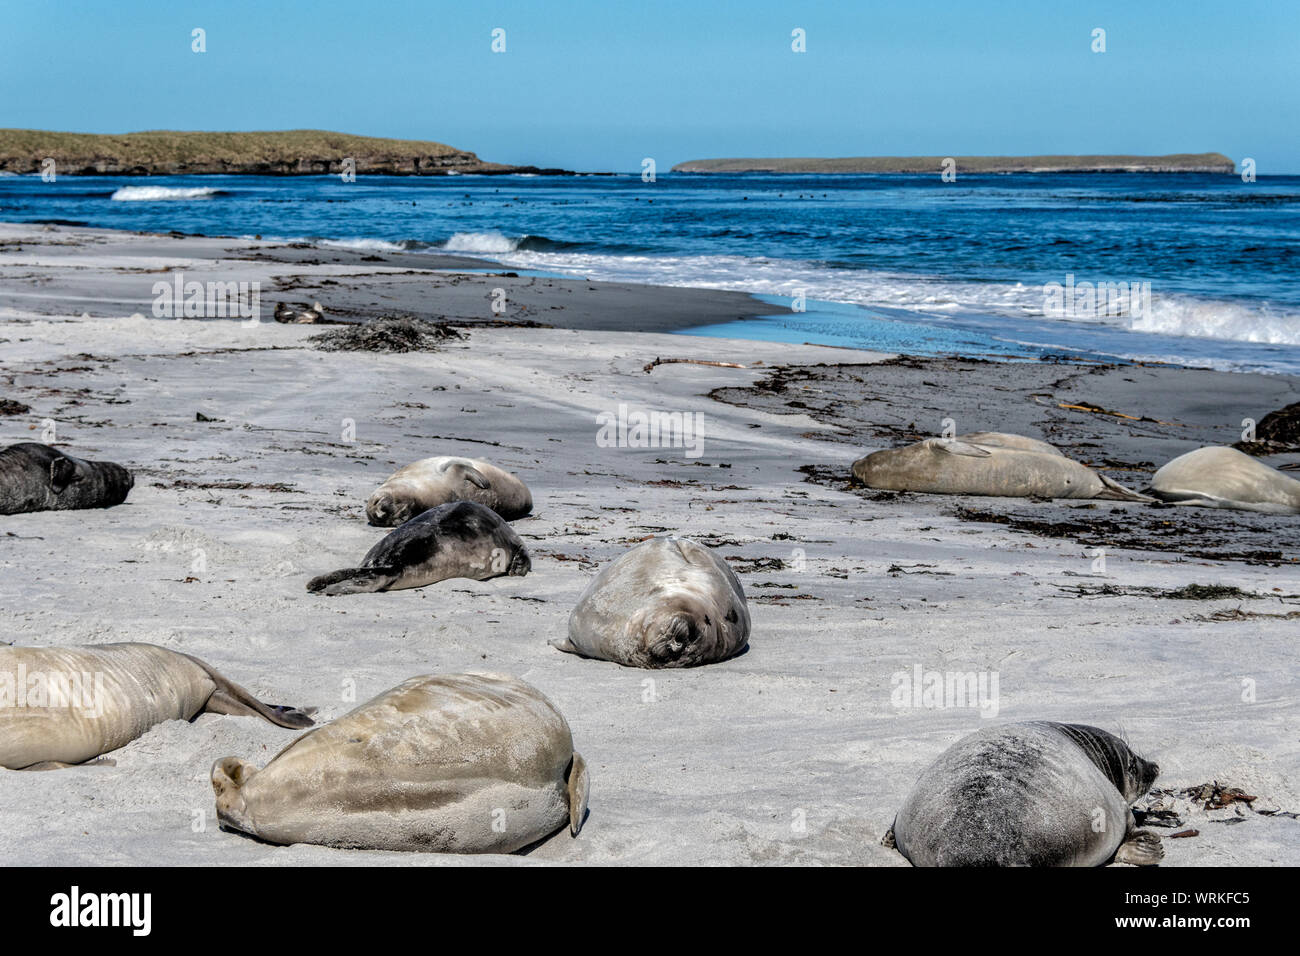 Southern Elephant Seal Pups, Mirounga leonina, lying on the shore, Sea Lion Island, in the Falkland Islands, South Atlantic Ocean Stock Photo